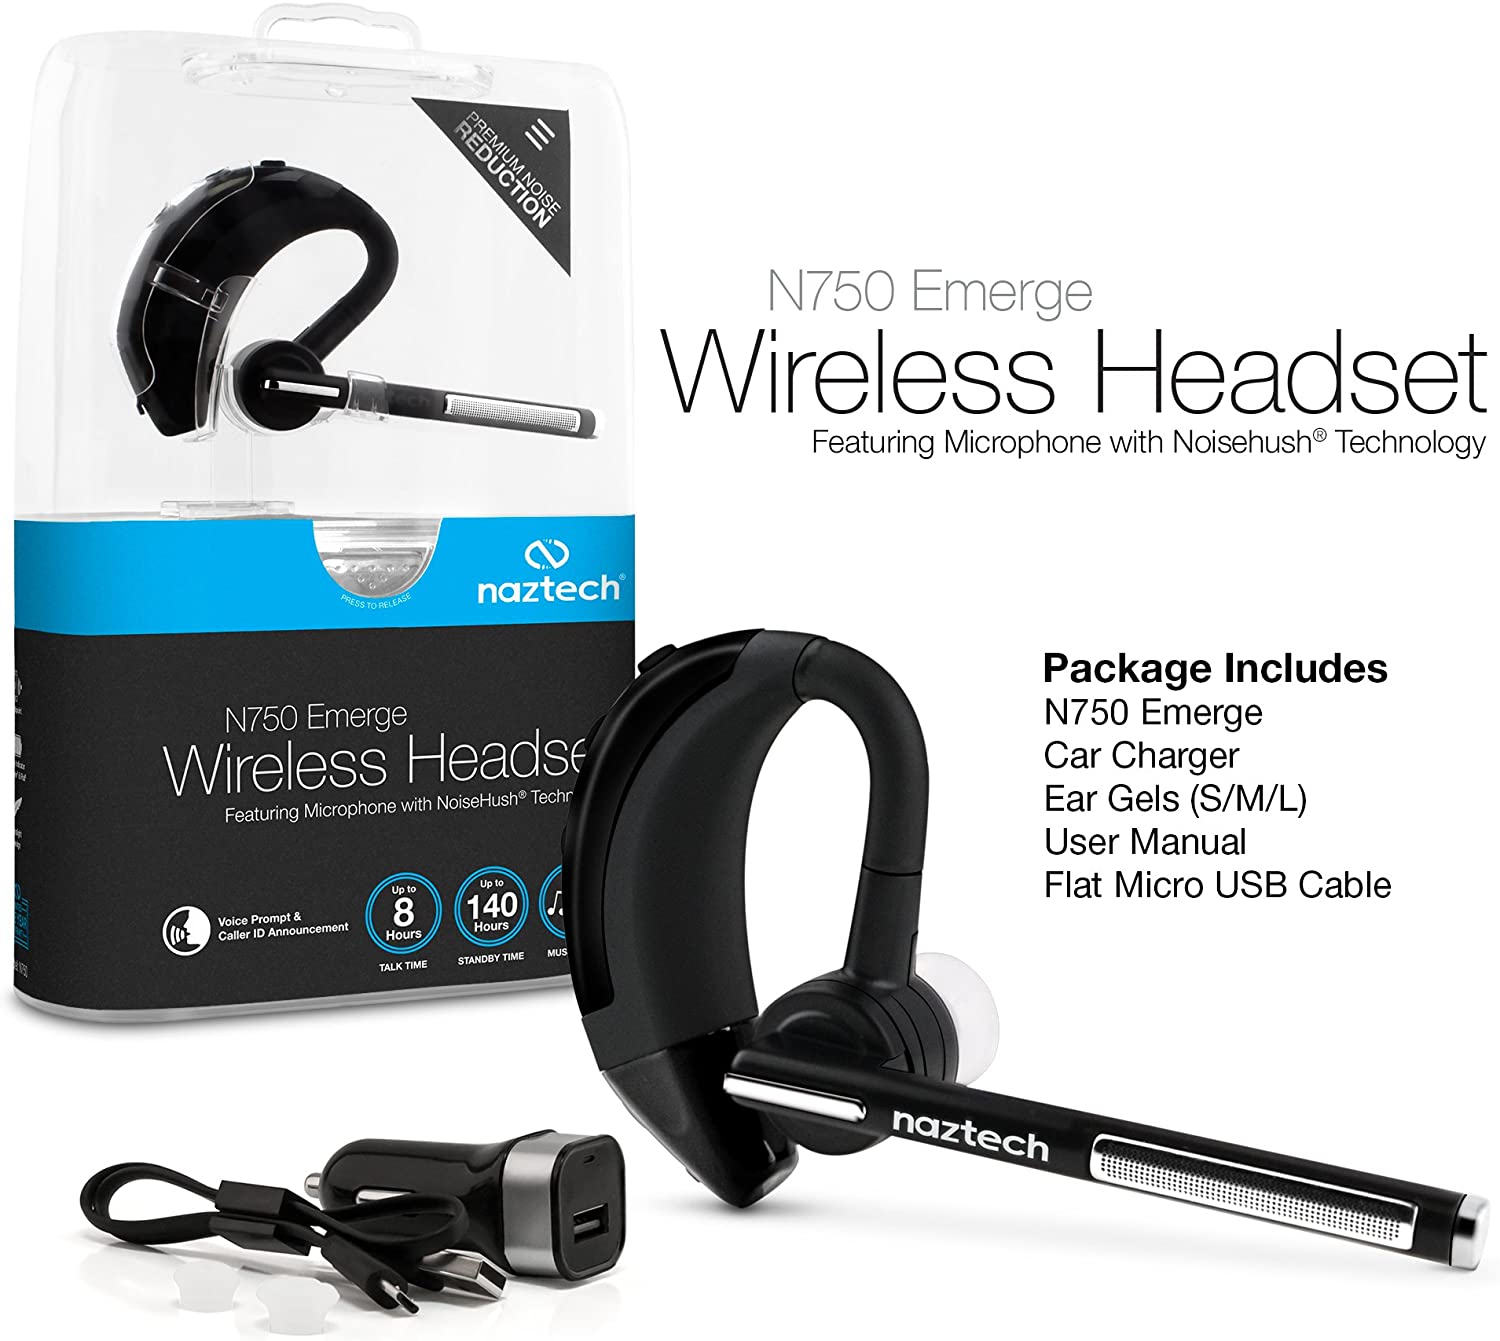 Naztech N750 Emerge Wireless Headset